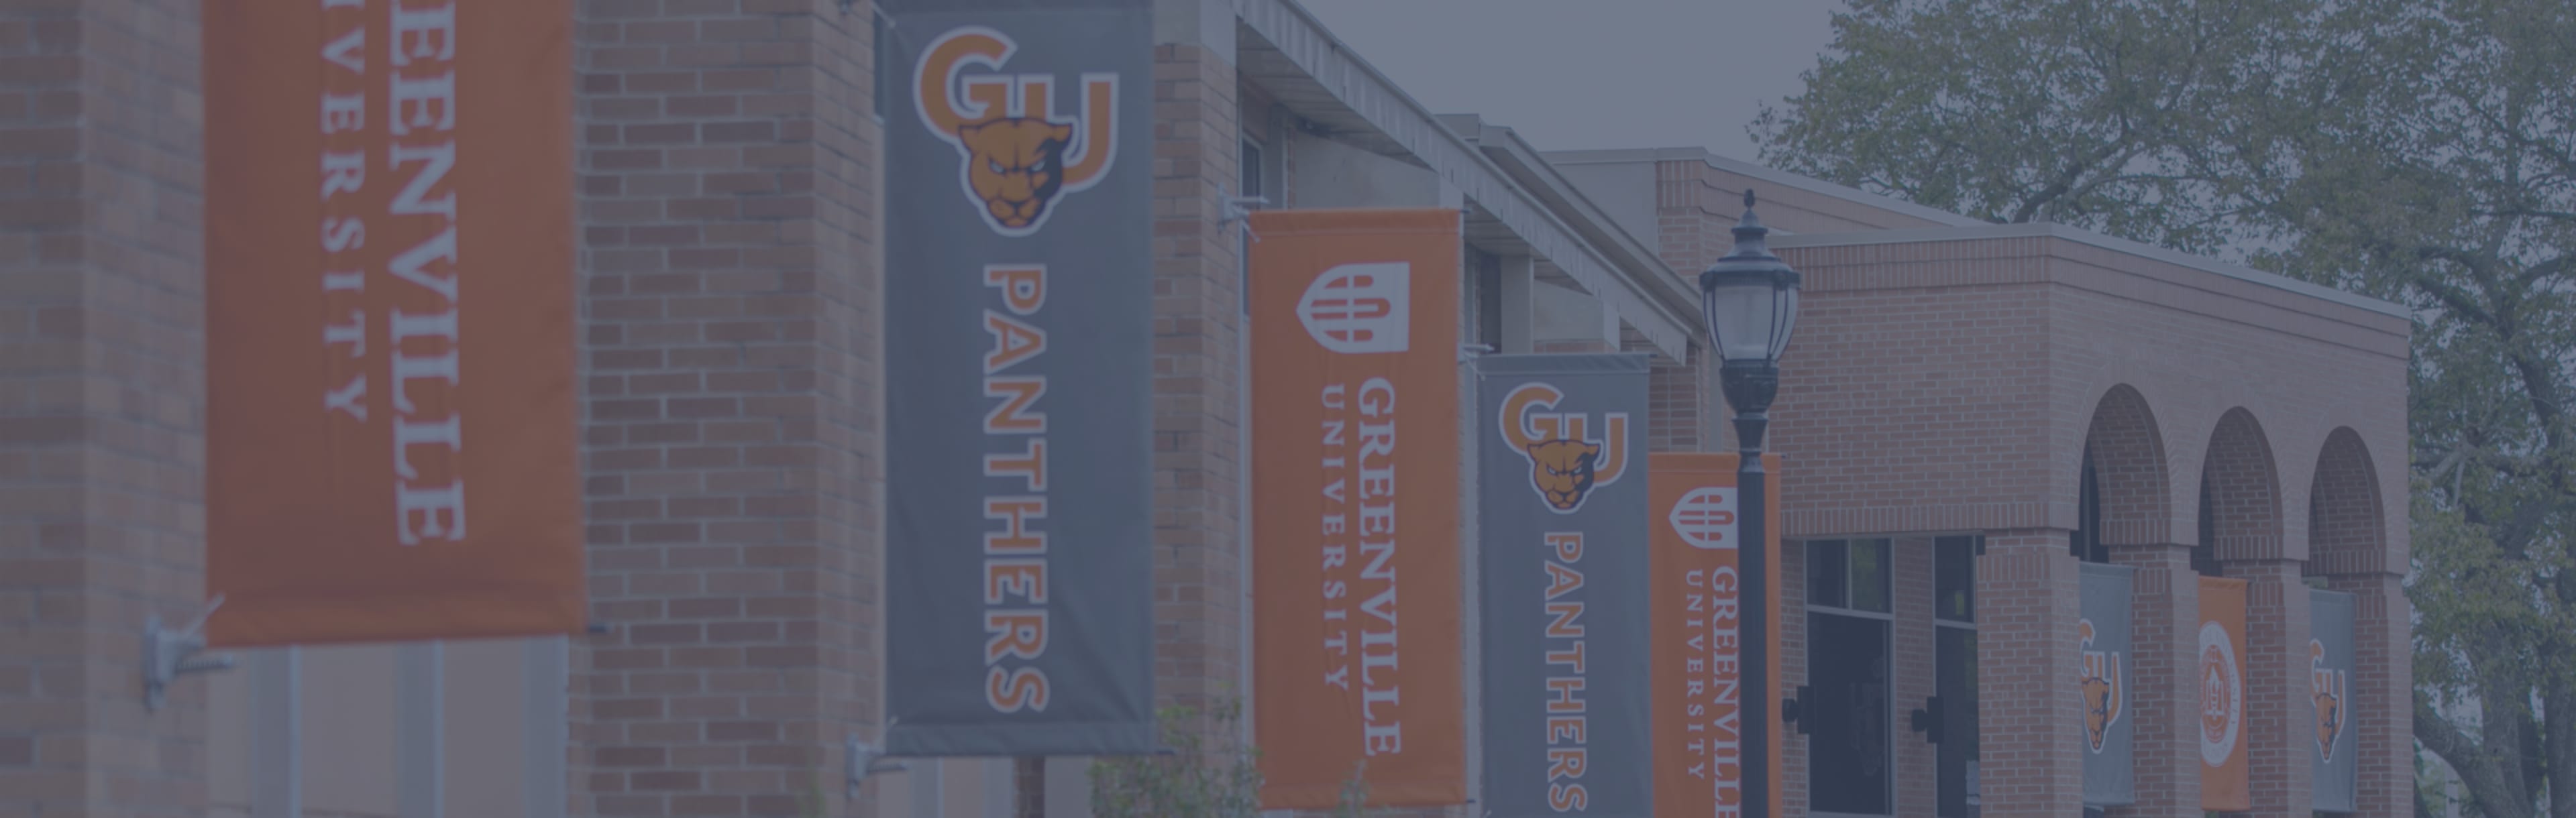 Greenville University Online Bachelor of Science in Agrarwirtschaft